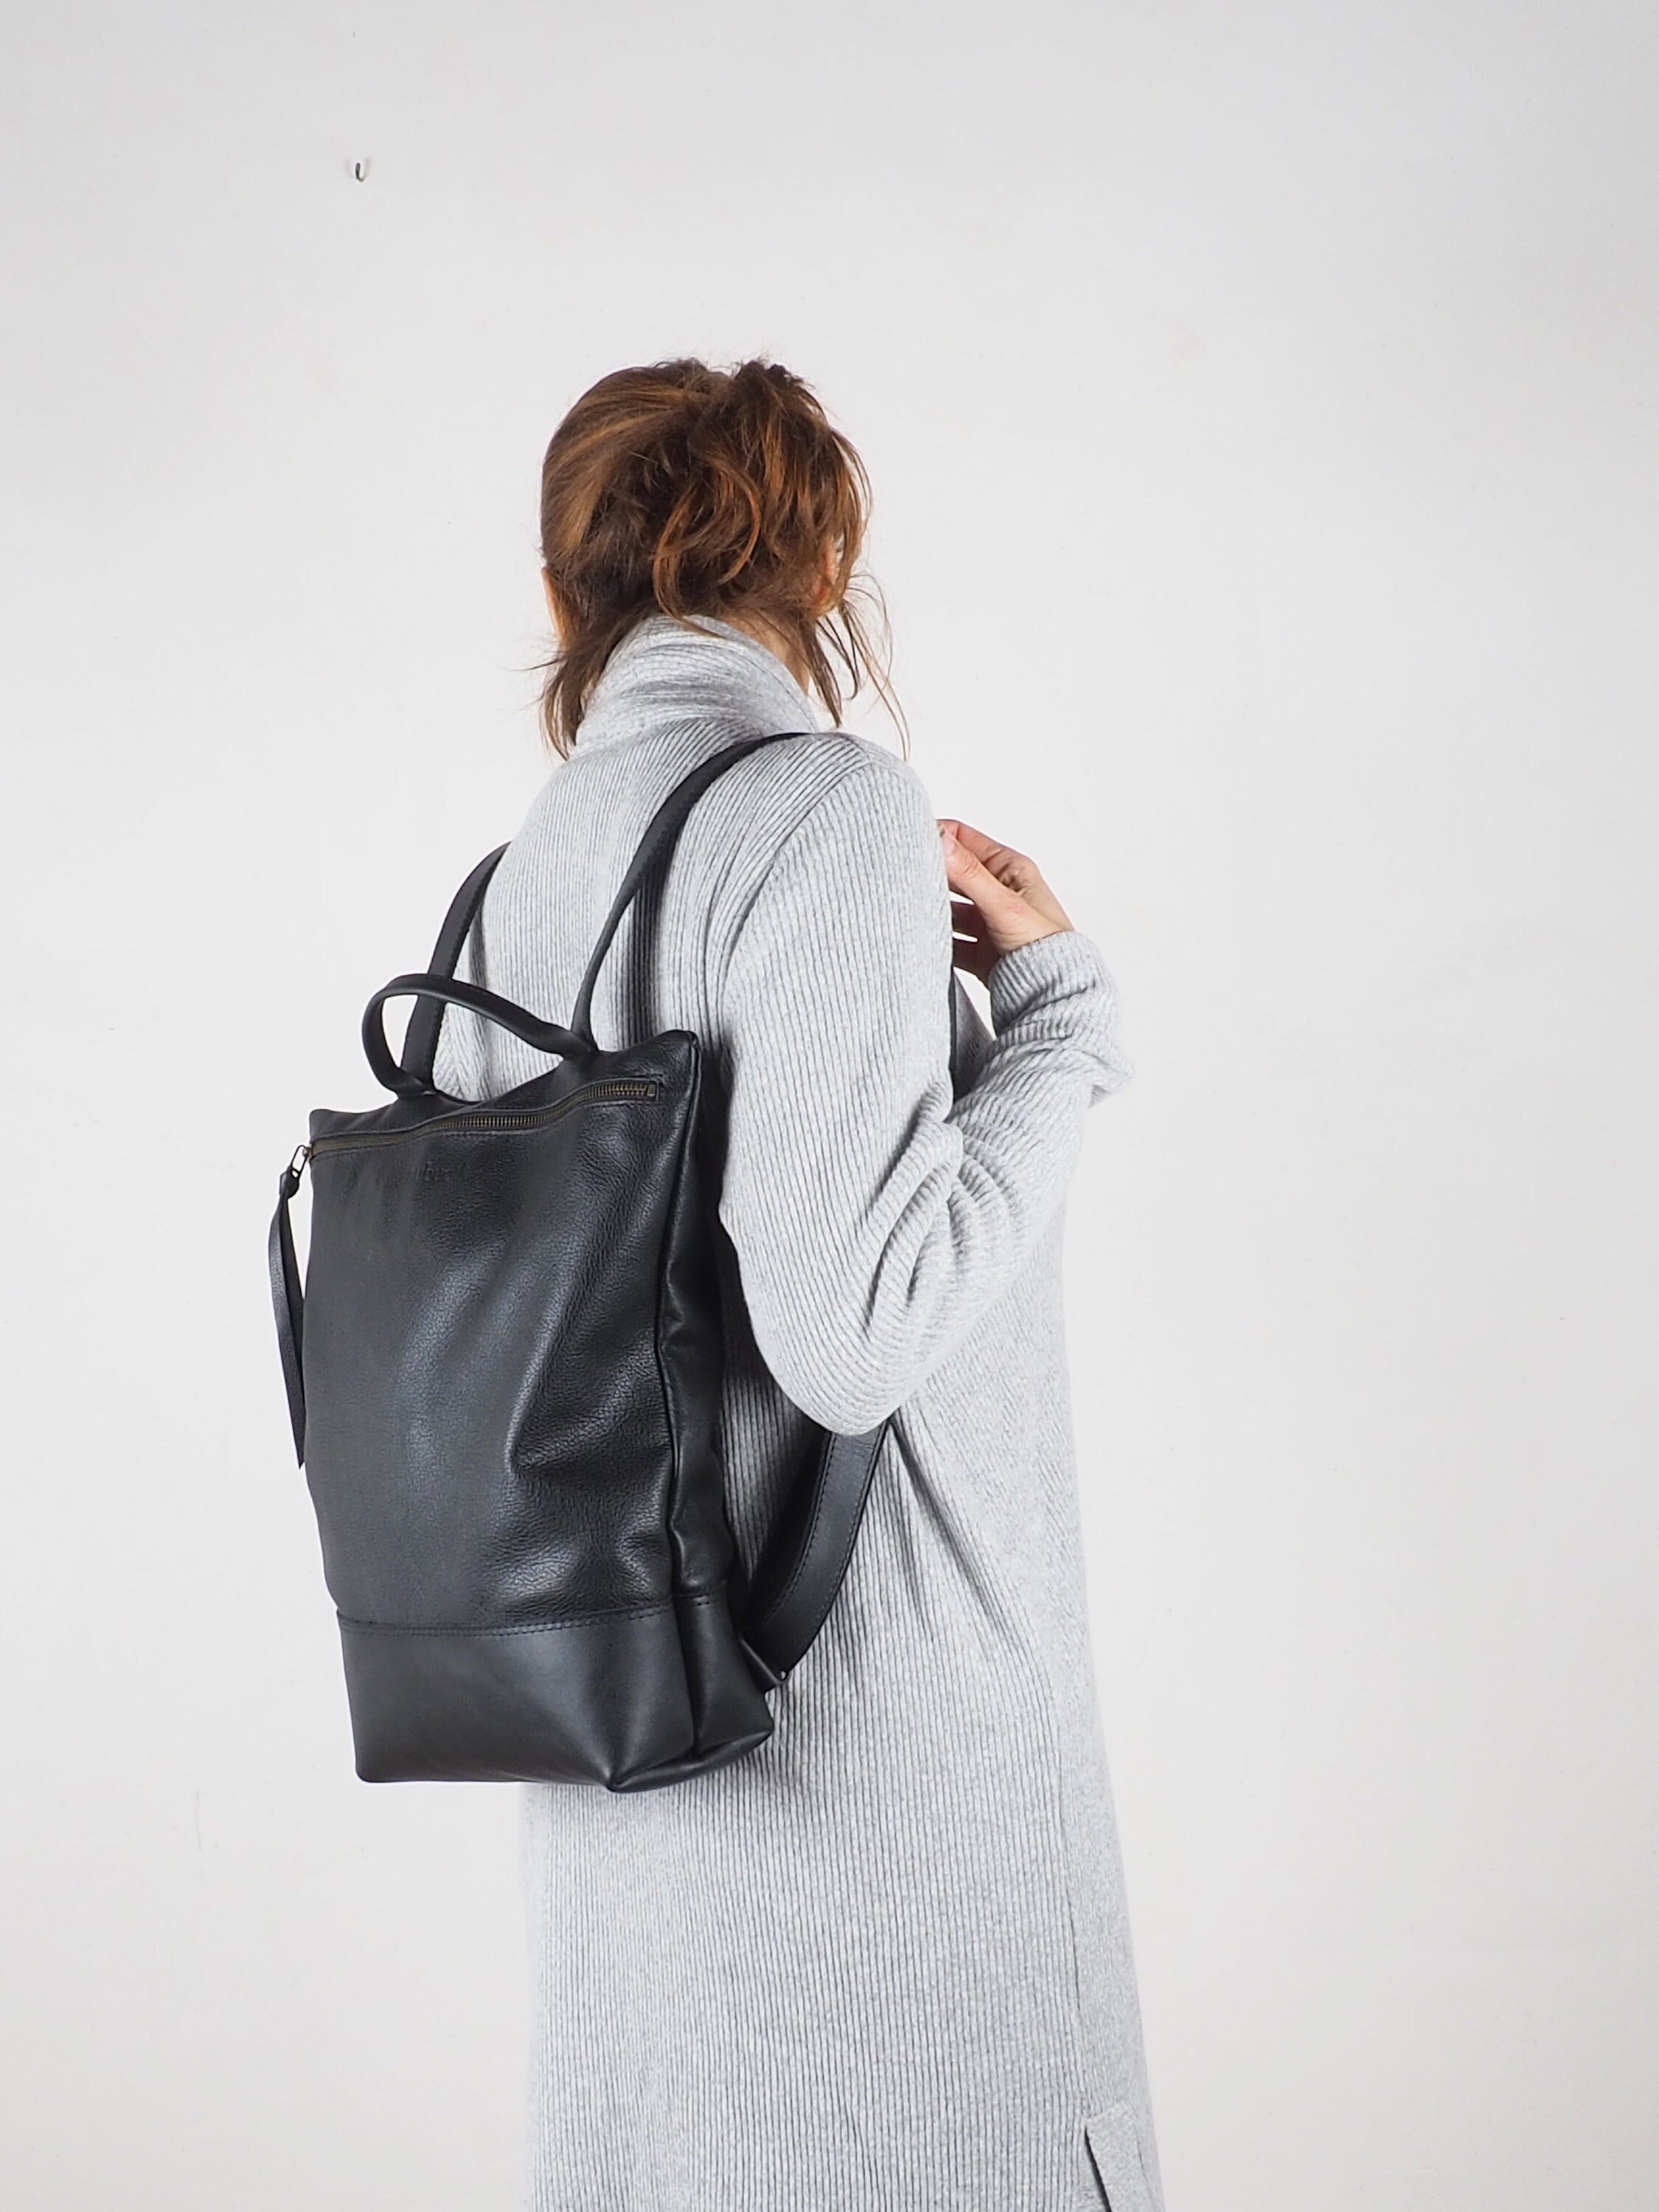 Black Leather backpack purse women laptop backpack zipper | Etsy